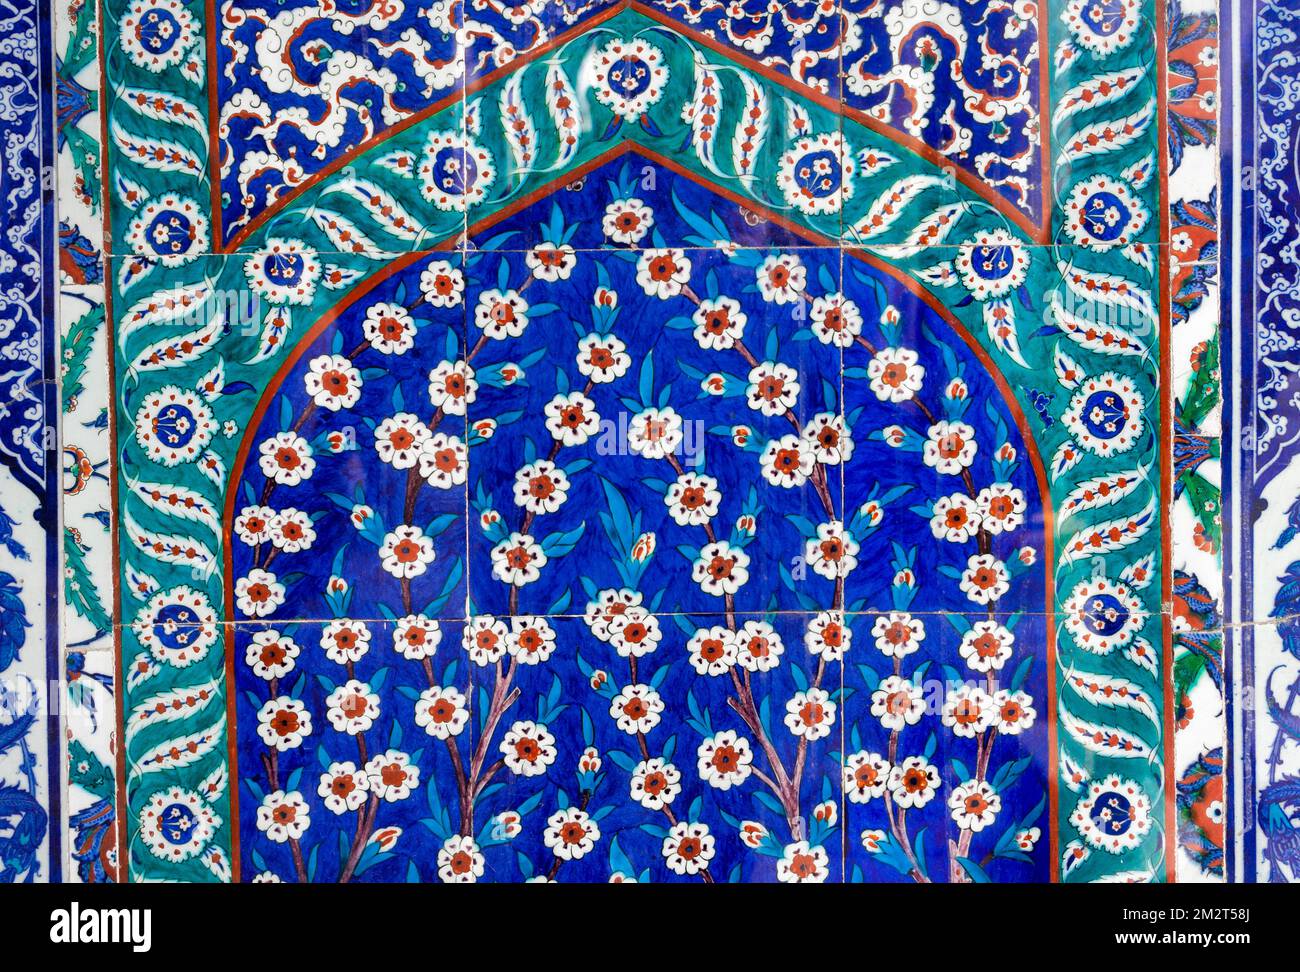 Blue painted handmade tiles of the Topkapi Palace, Istanbul, Turkey. Stock Photo